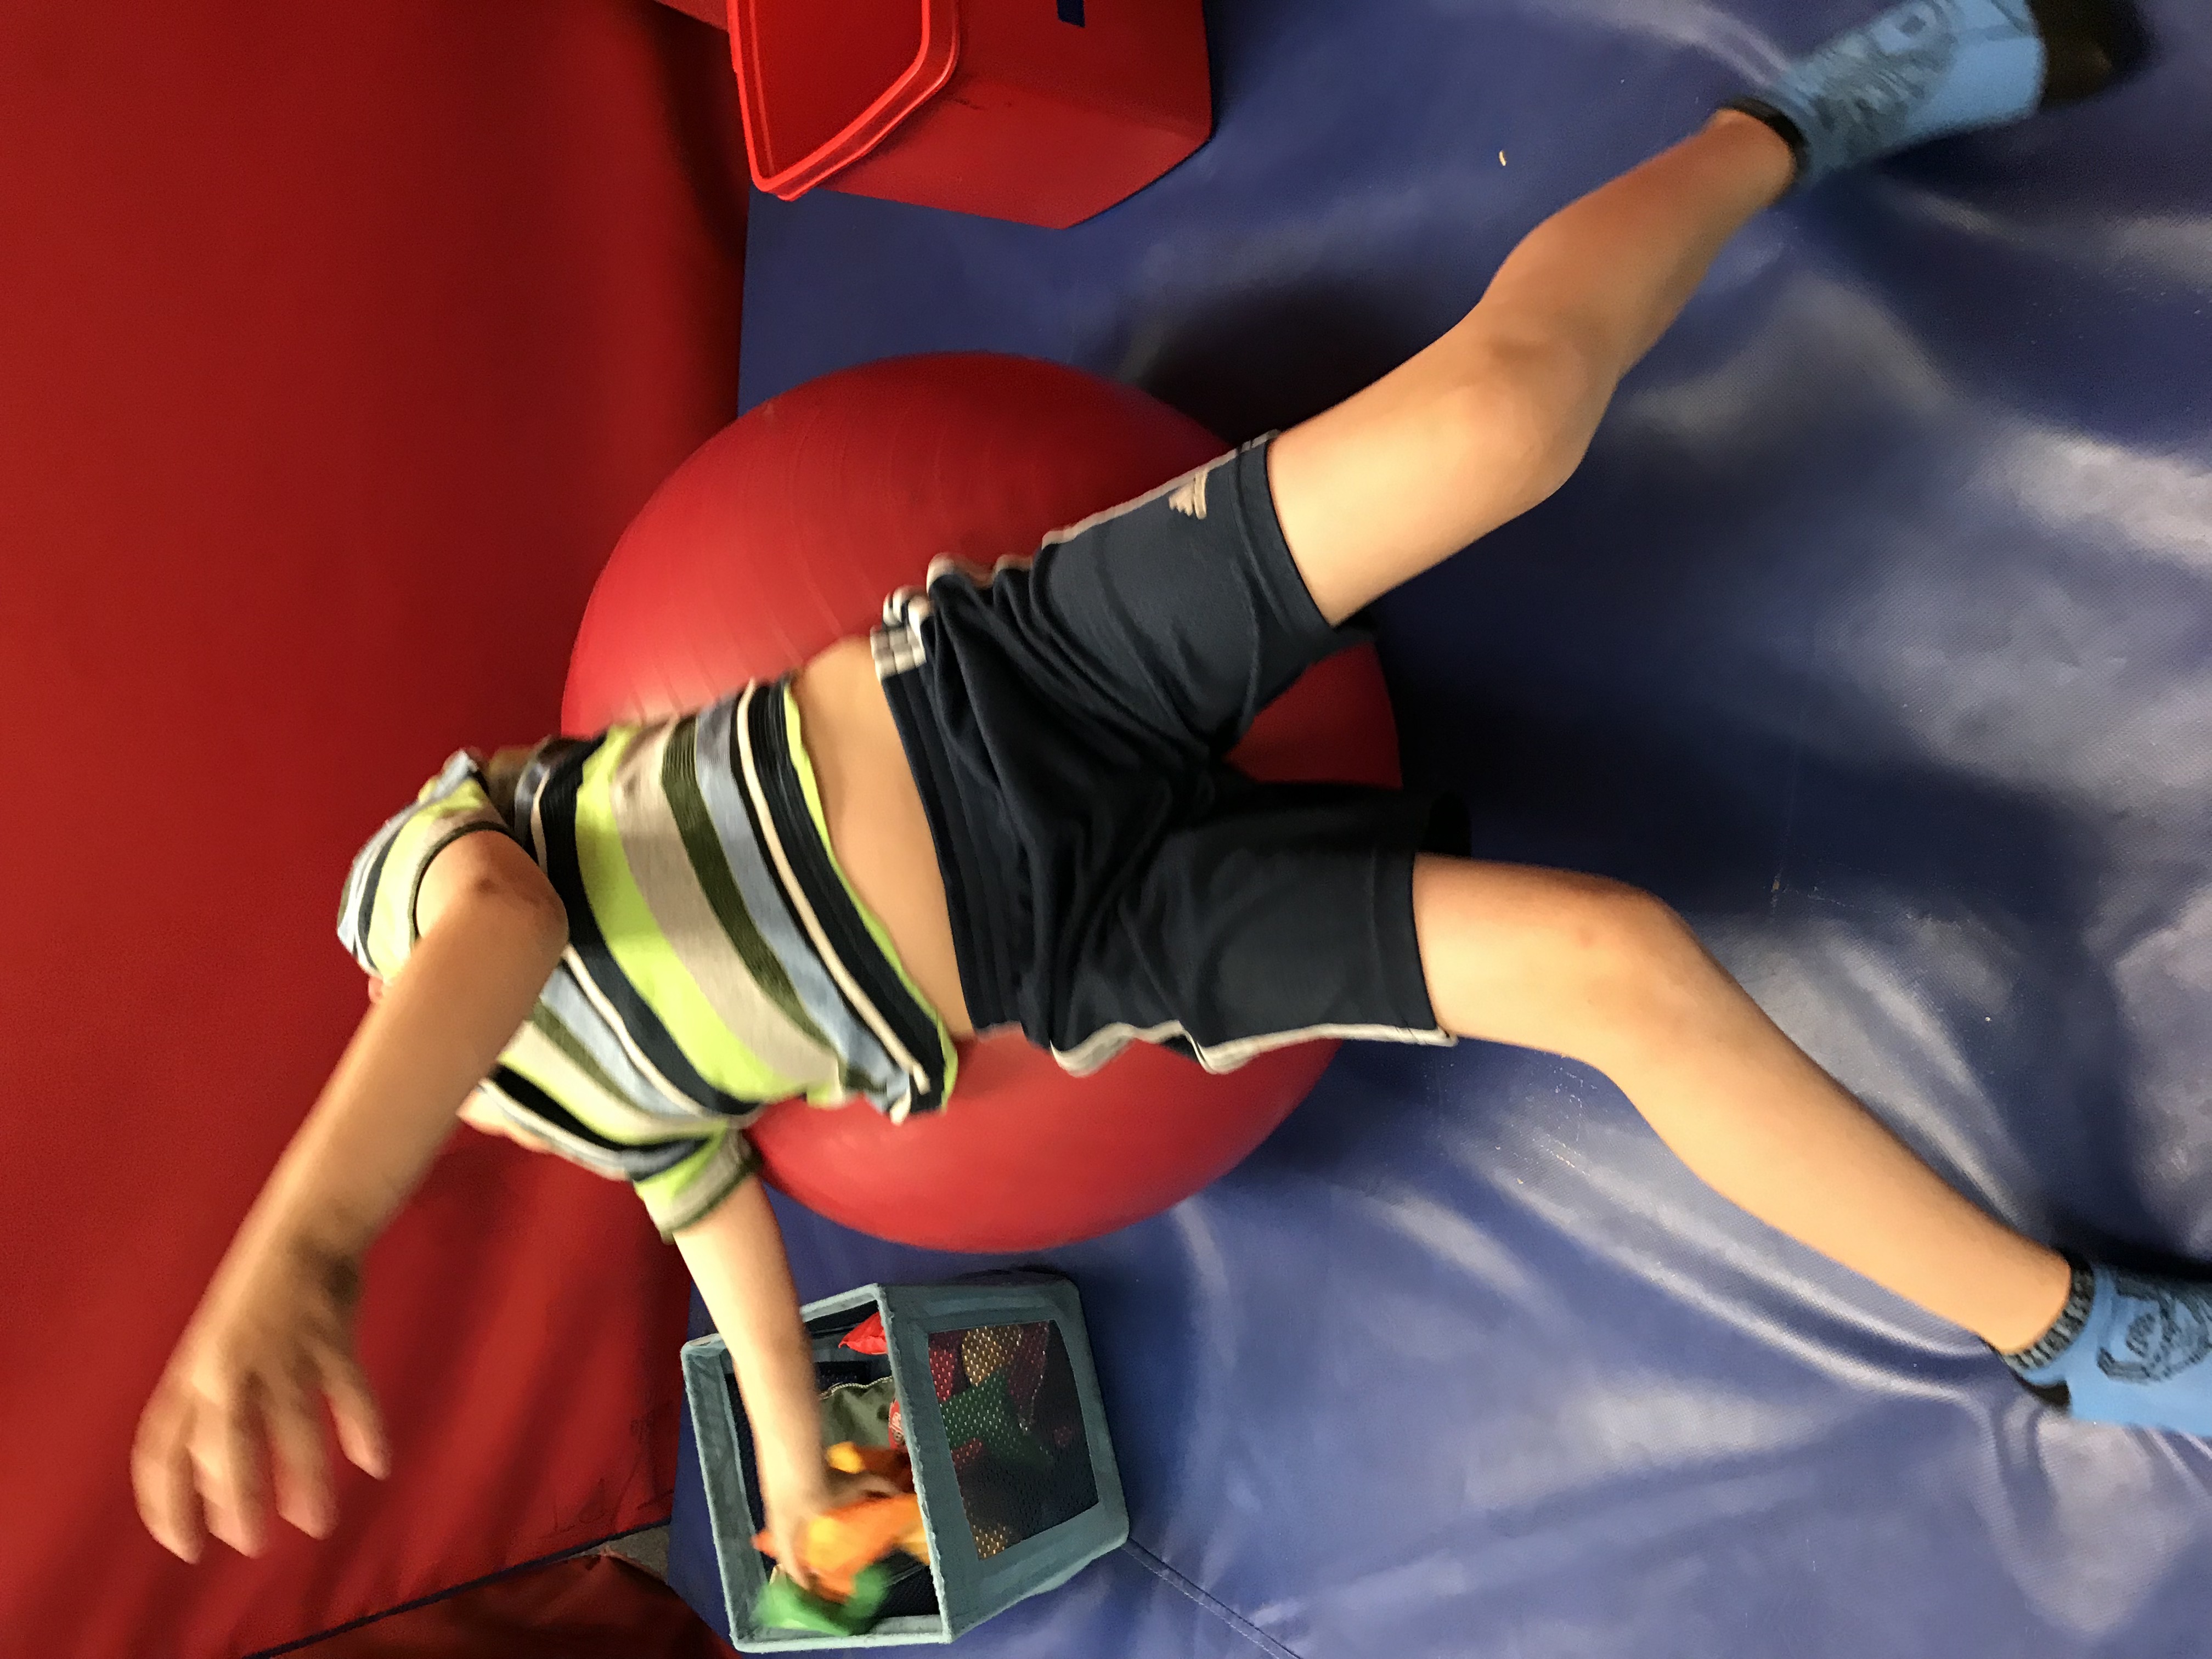 Boy reaching into bin while laying on yoga ball